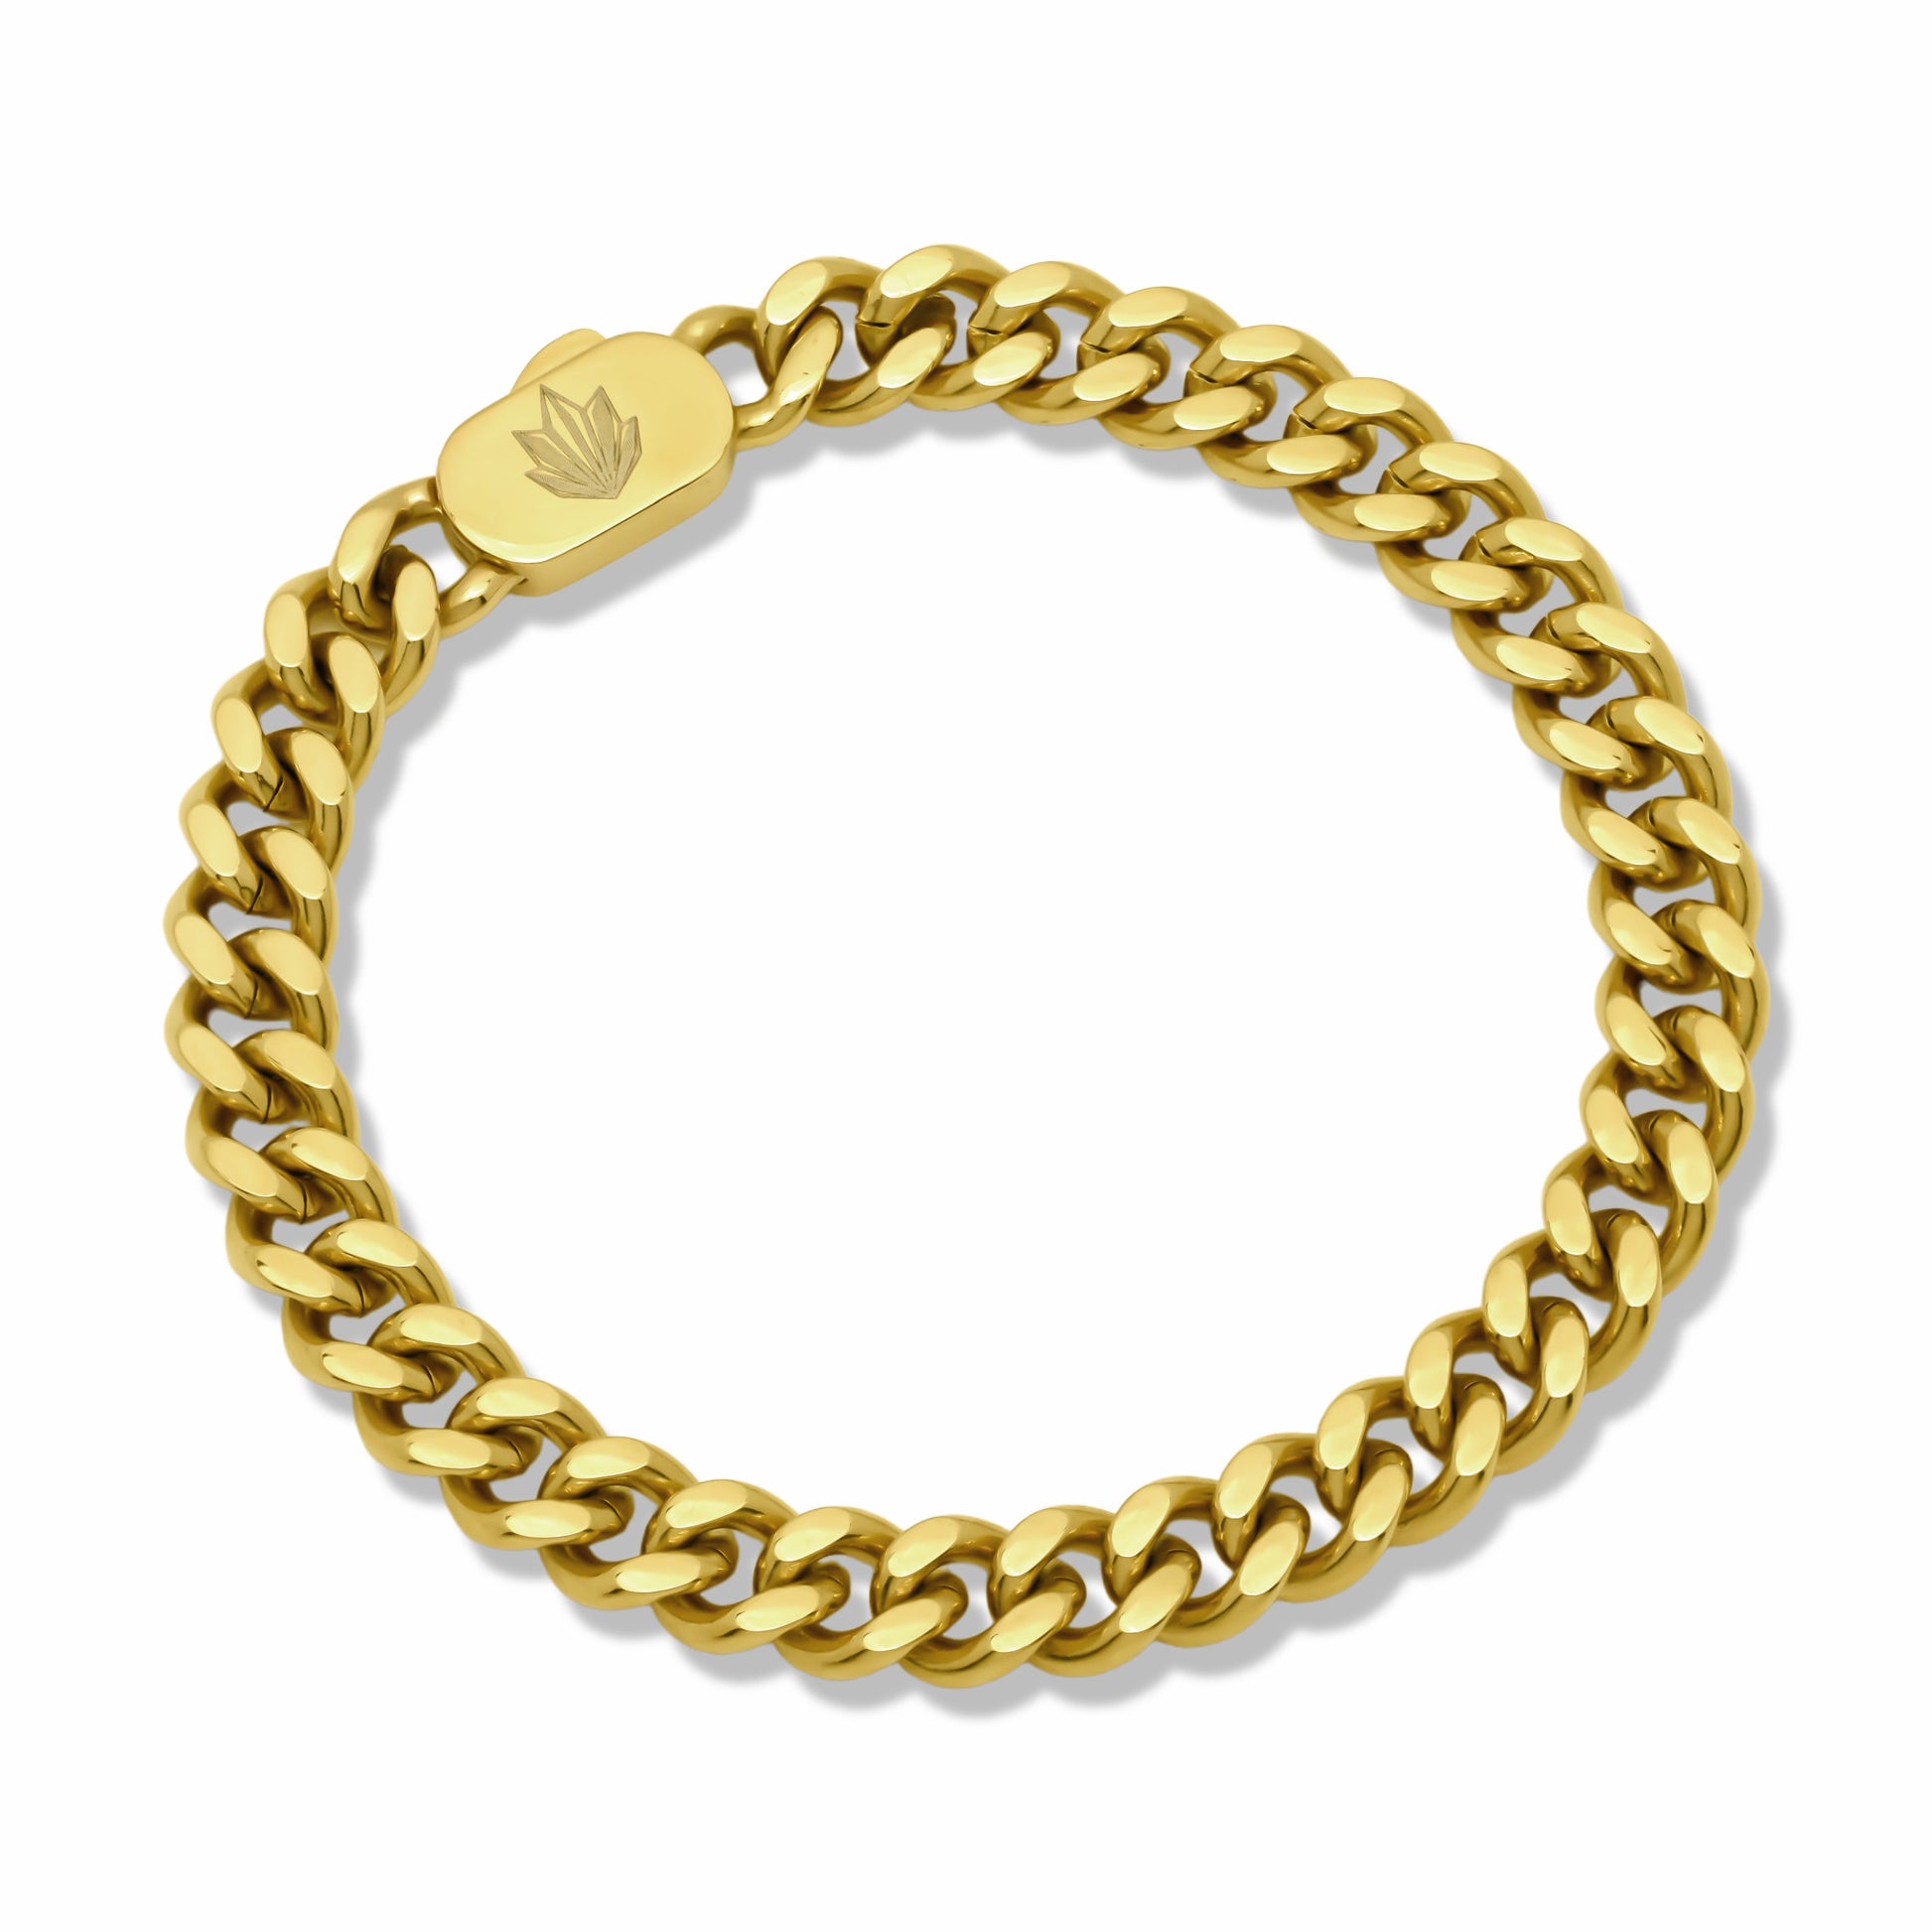 Cuban Chain Bracelet Gold 6mm on white background